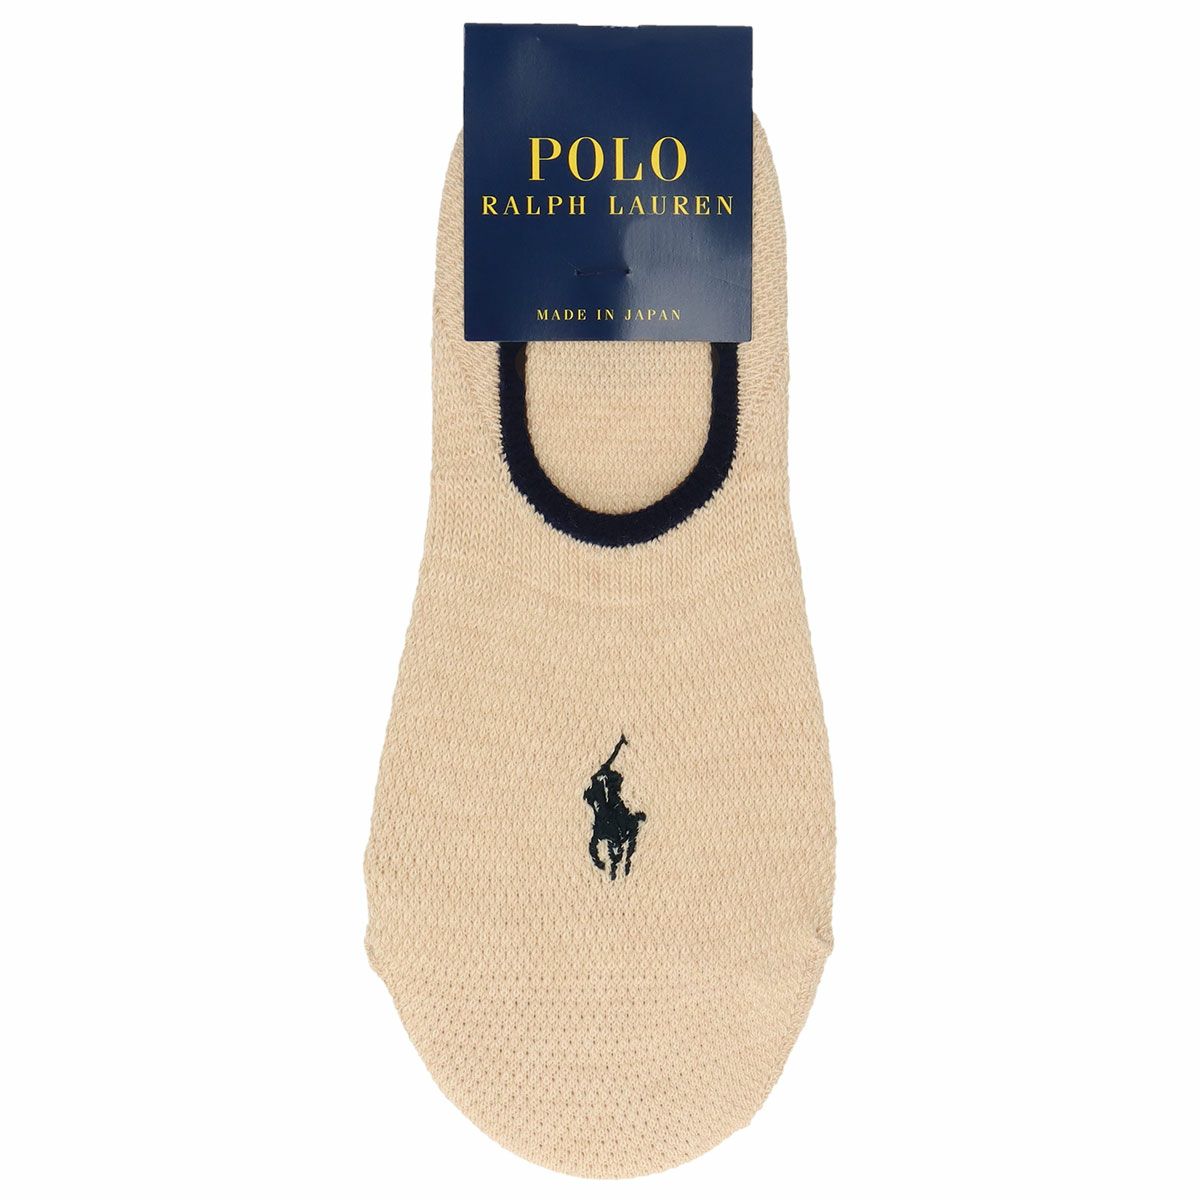 POLO RALPH LAUREN | 靴下・ソックス通販のナイガイ公式ショップ